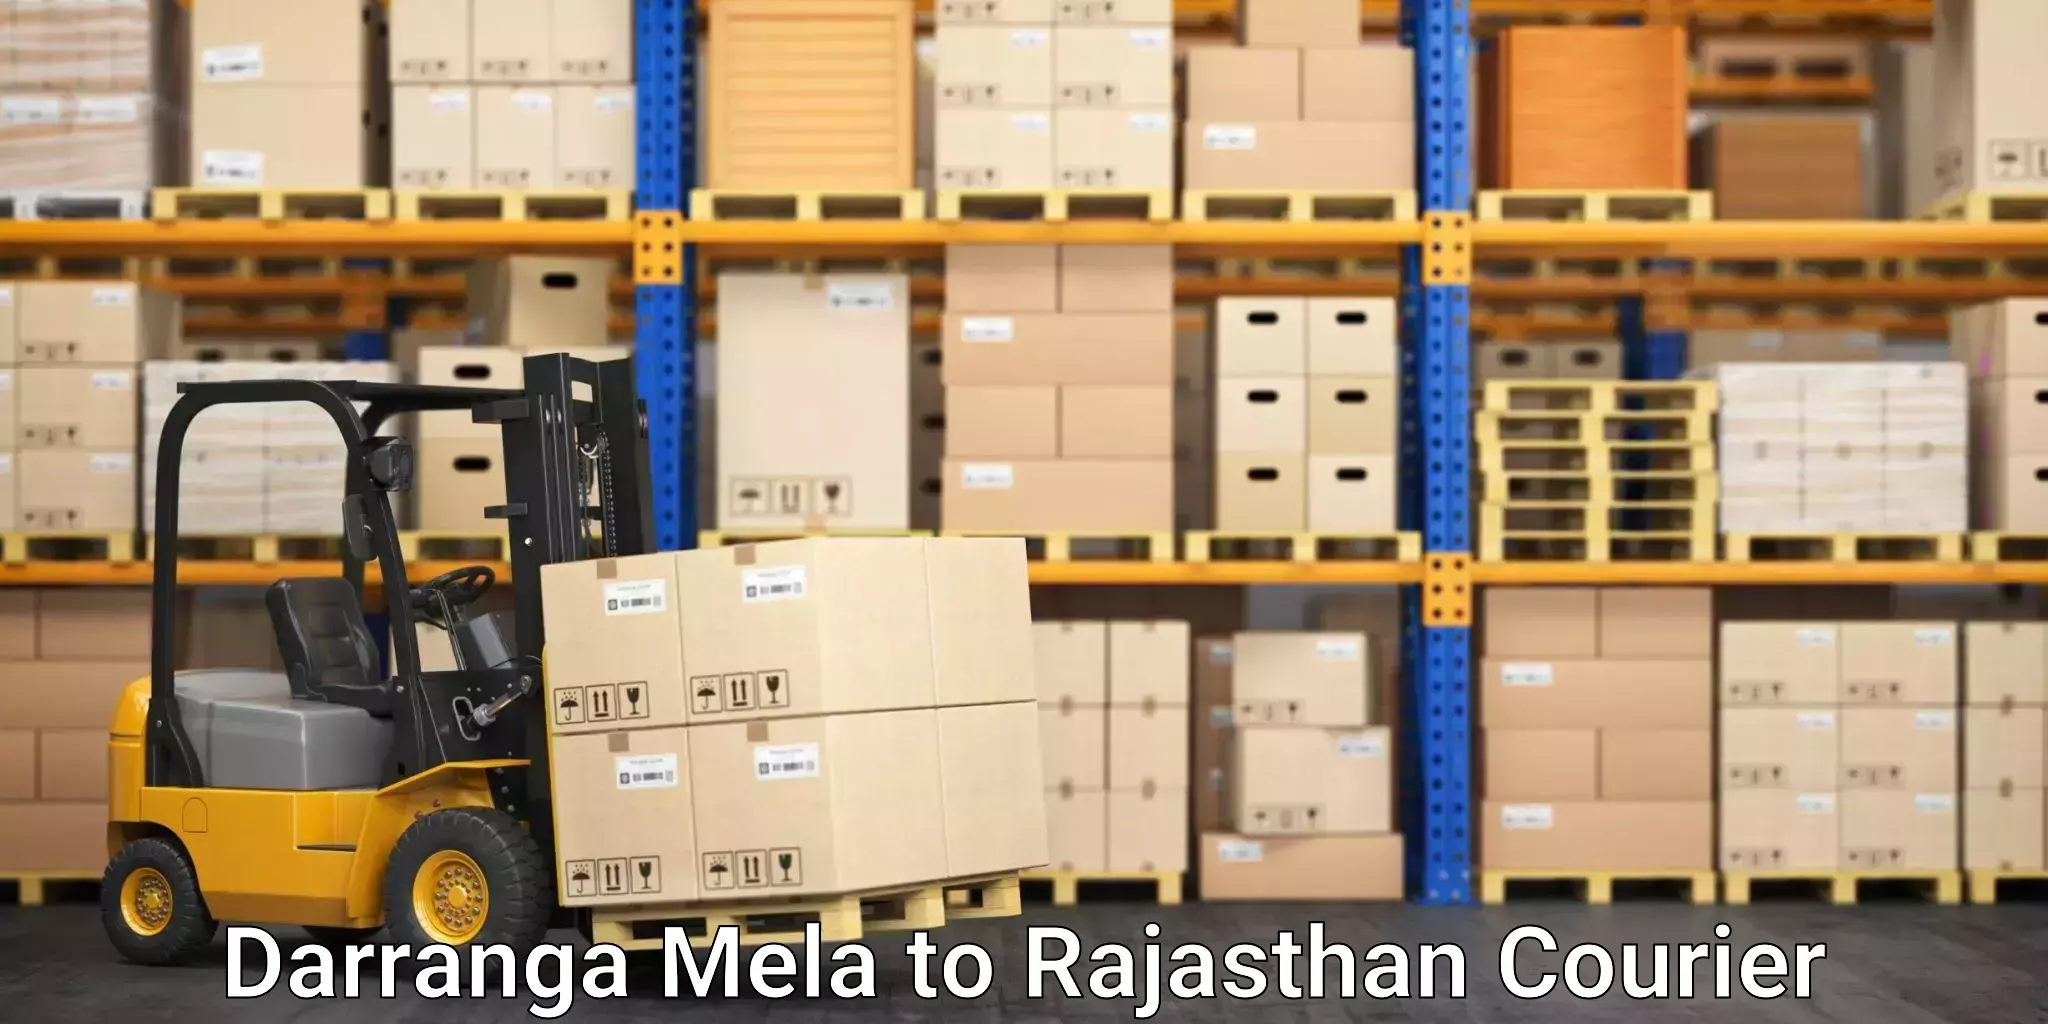 Large package courier in Darranga Mela to Chirawa